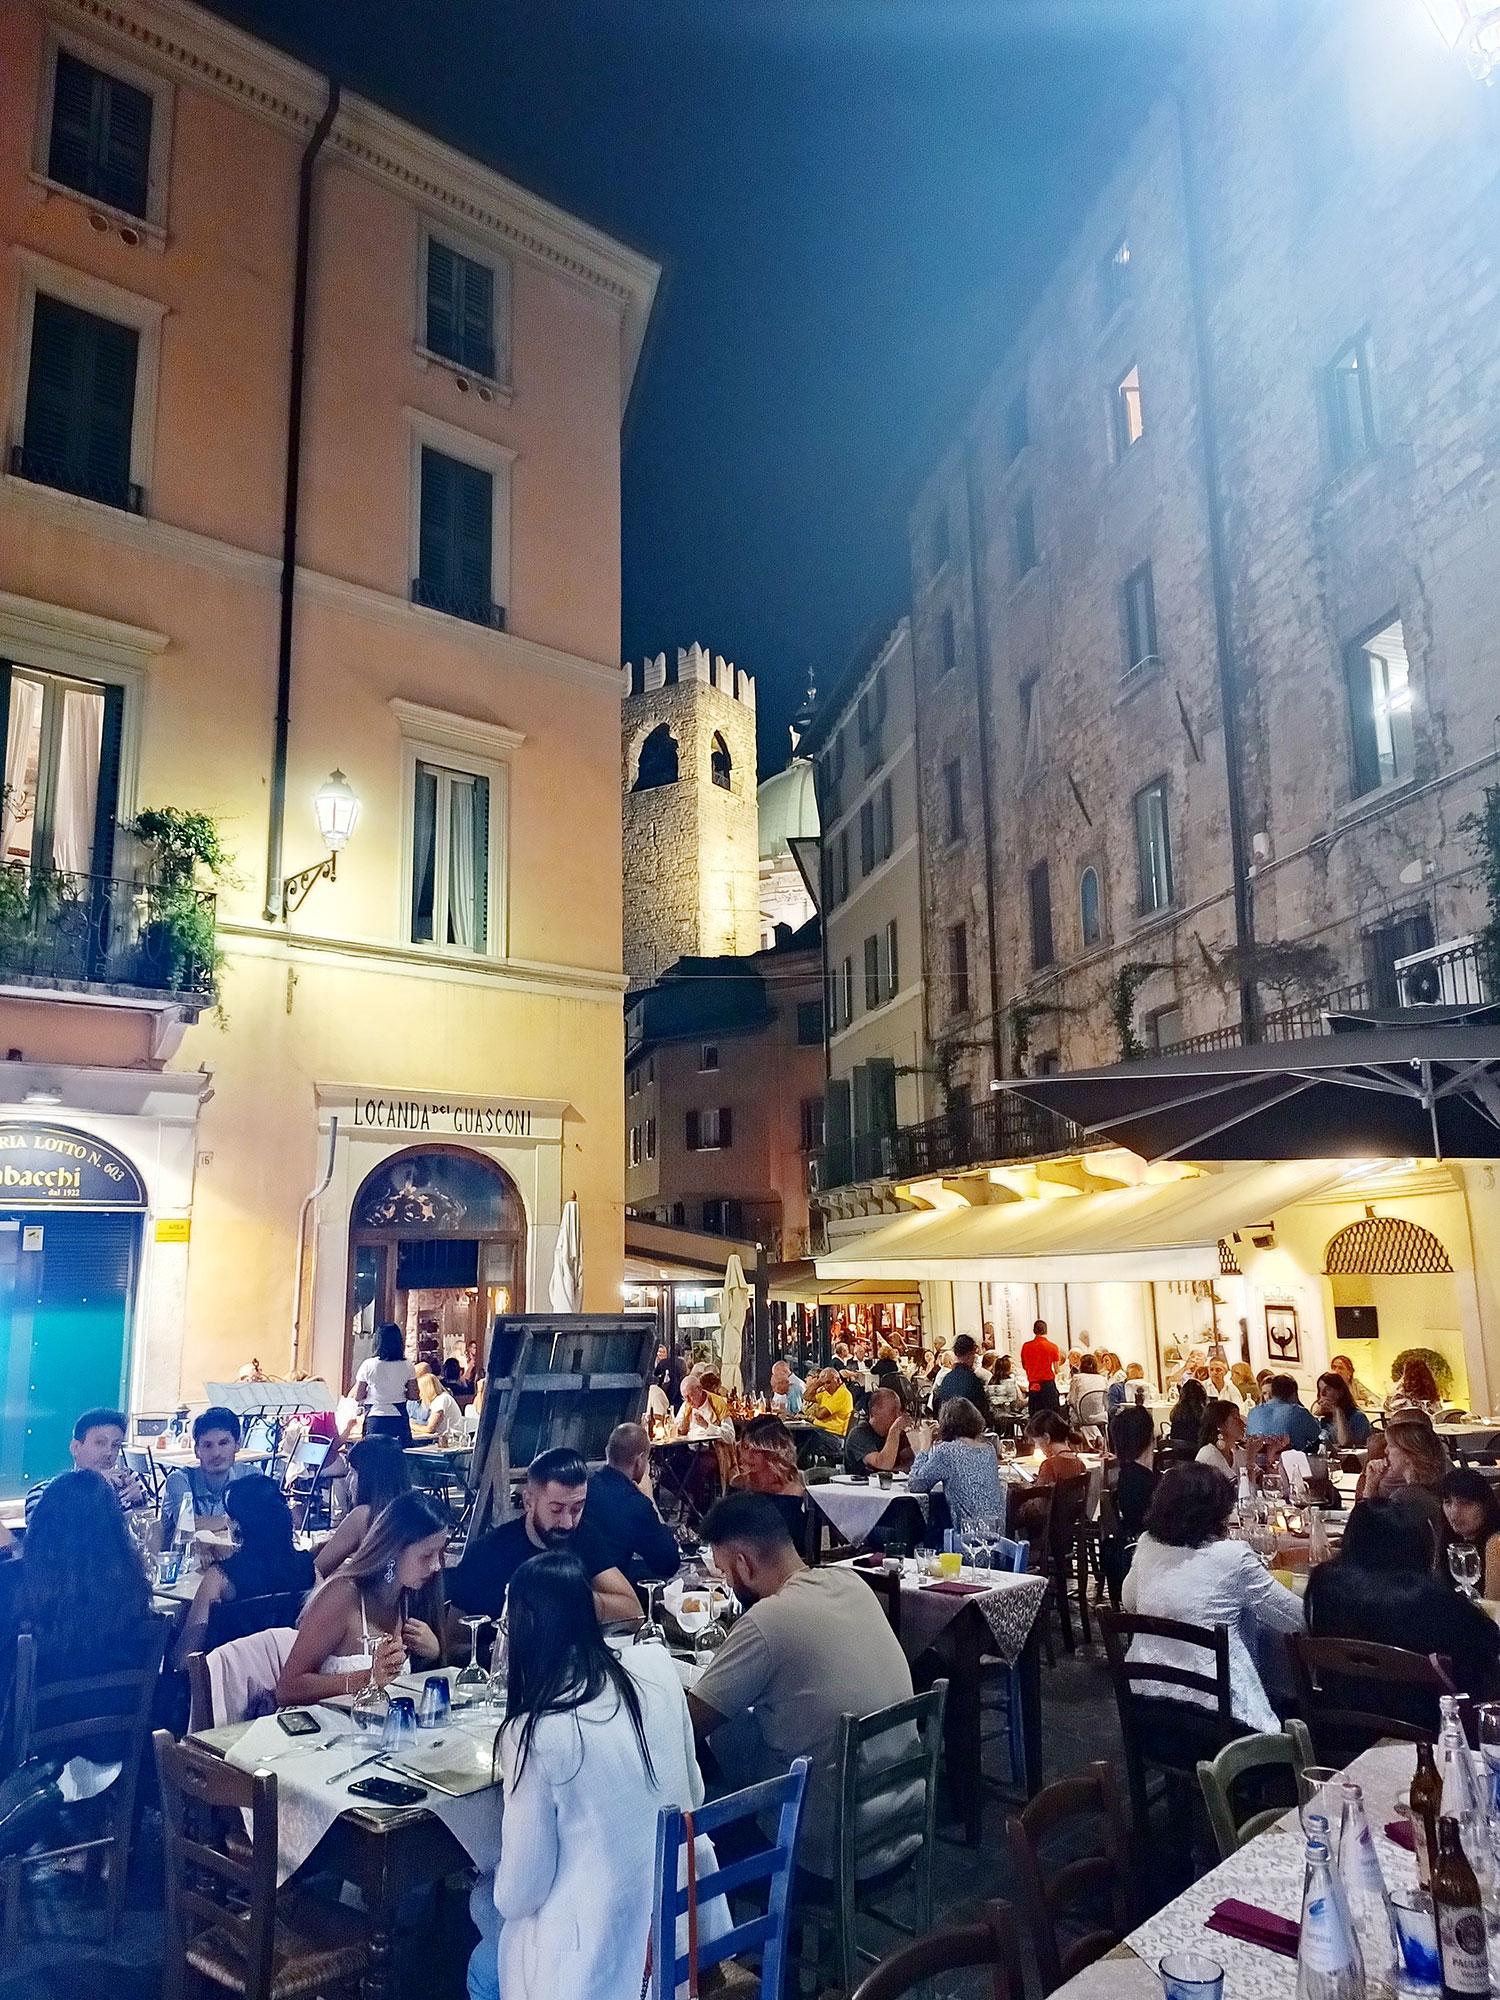 Enjoy the many restaurants and bars in the heart of Brescia